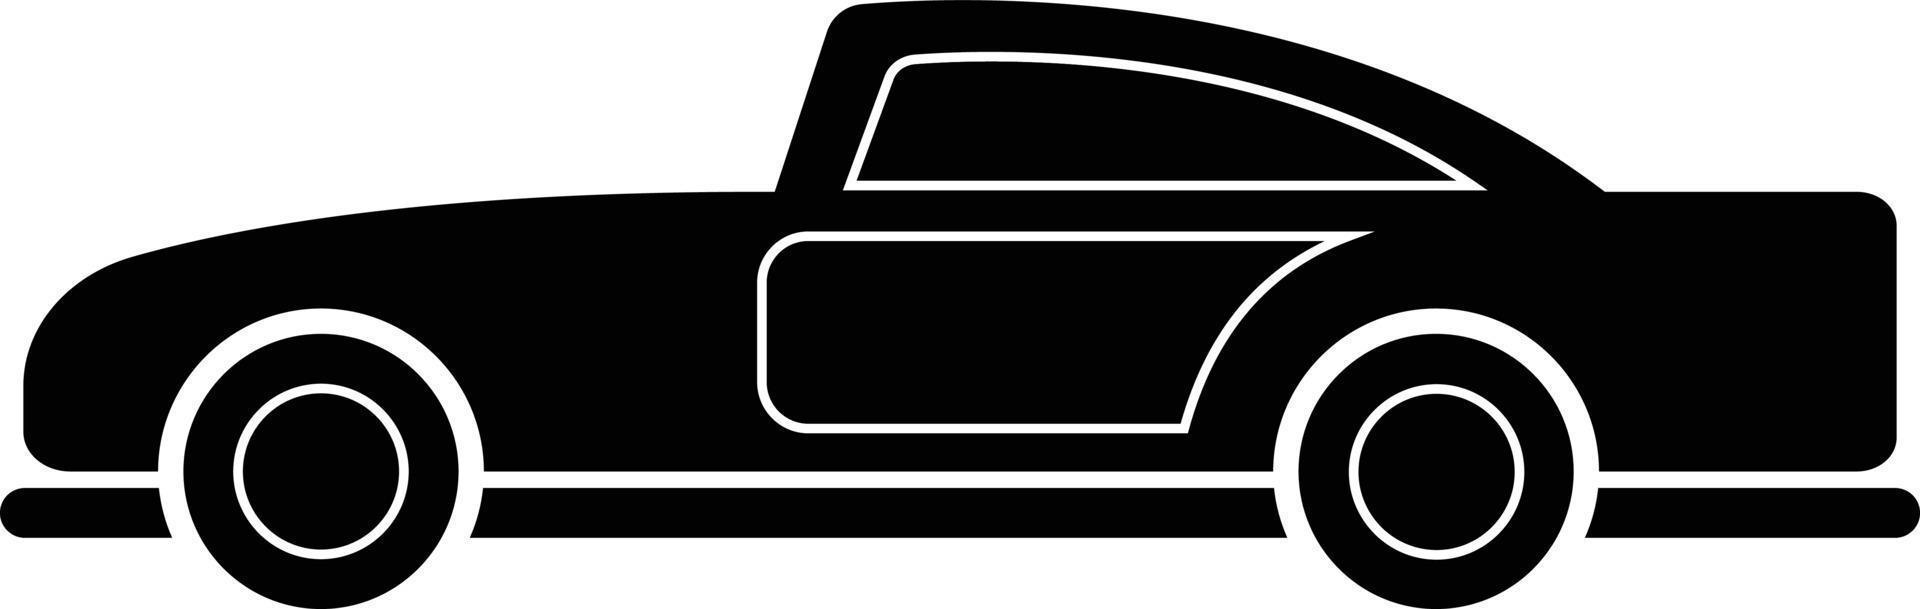 Classic car silhouette icon flat vector illustration for automotive design element